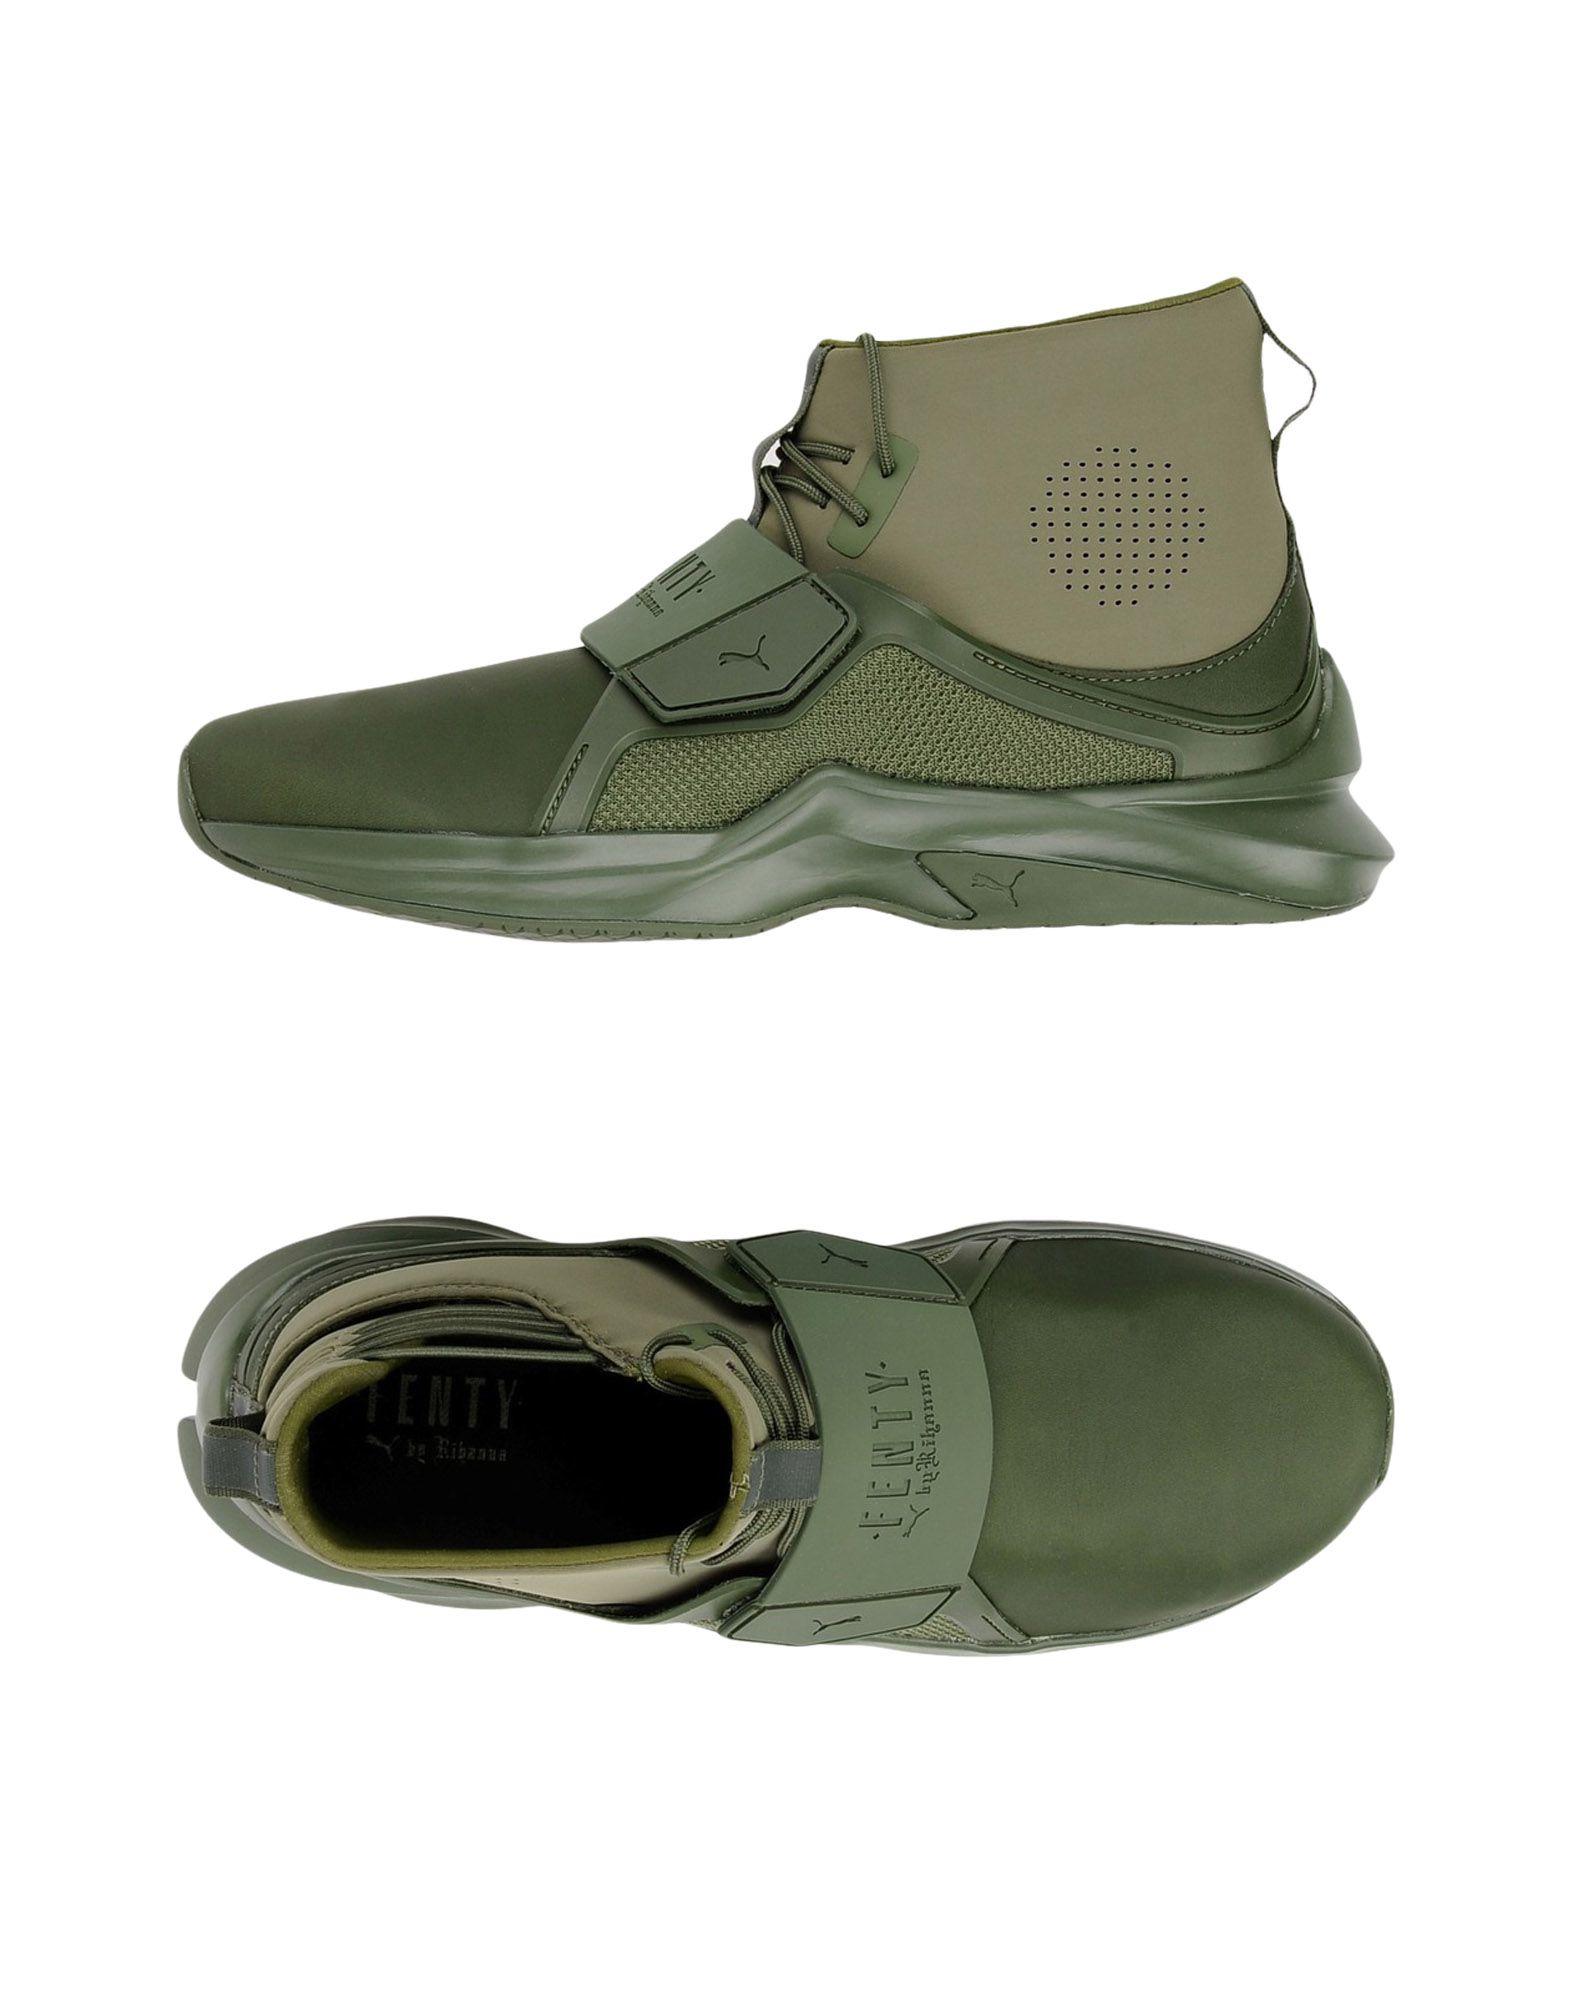 puma sneakers green